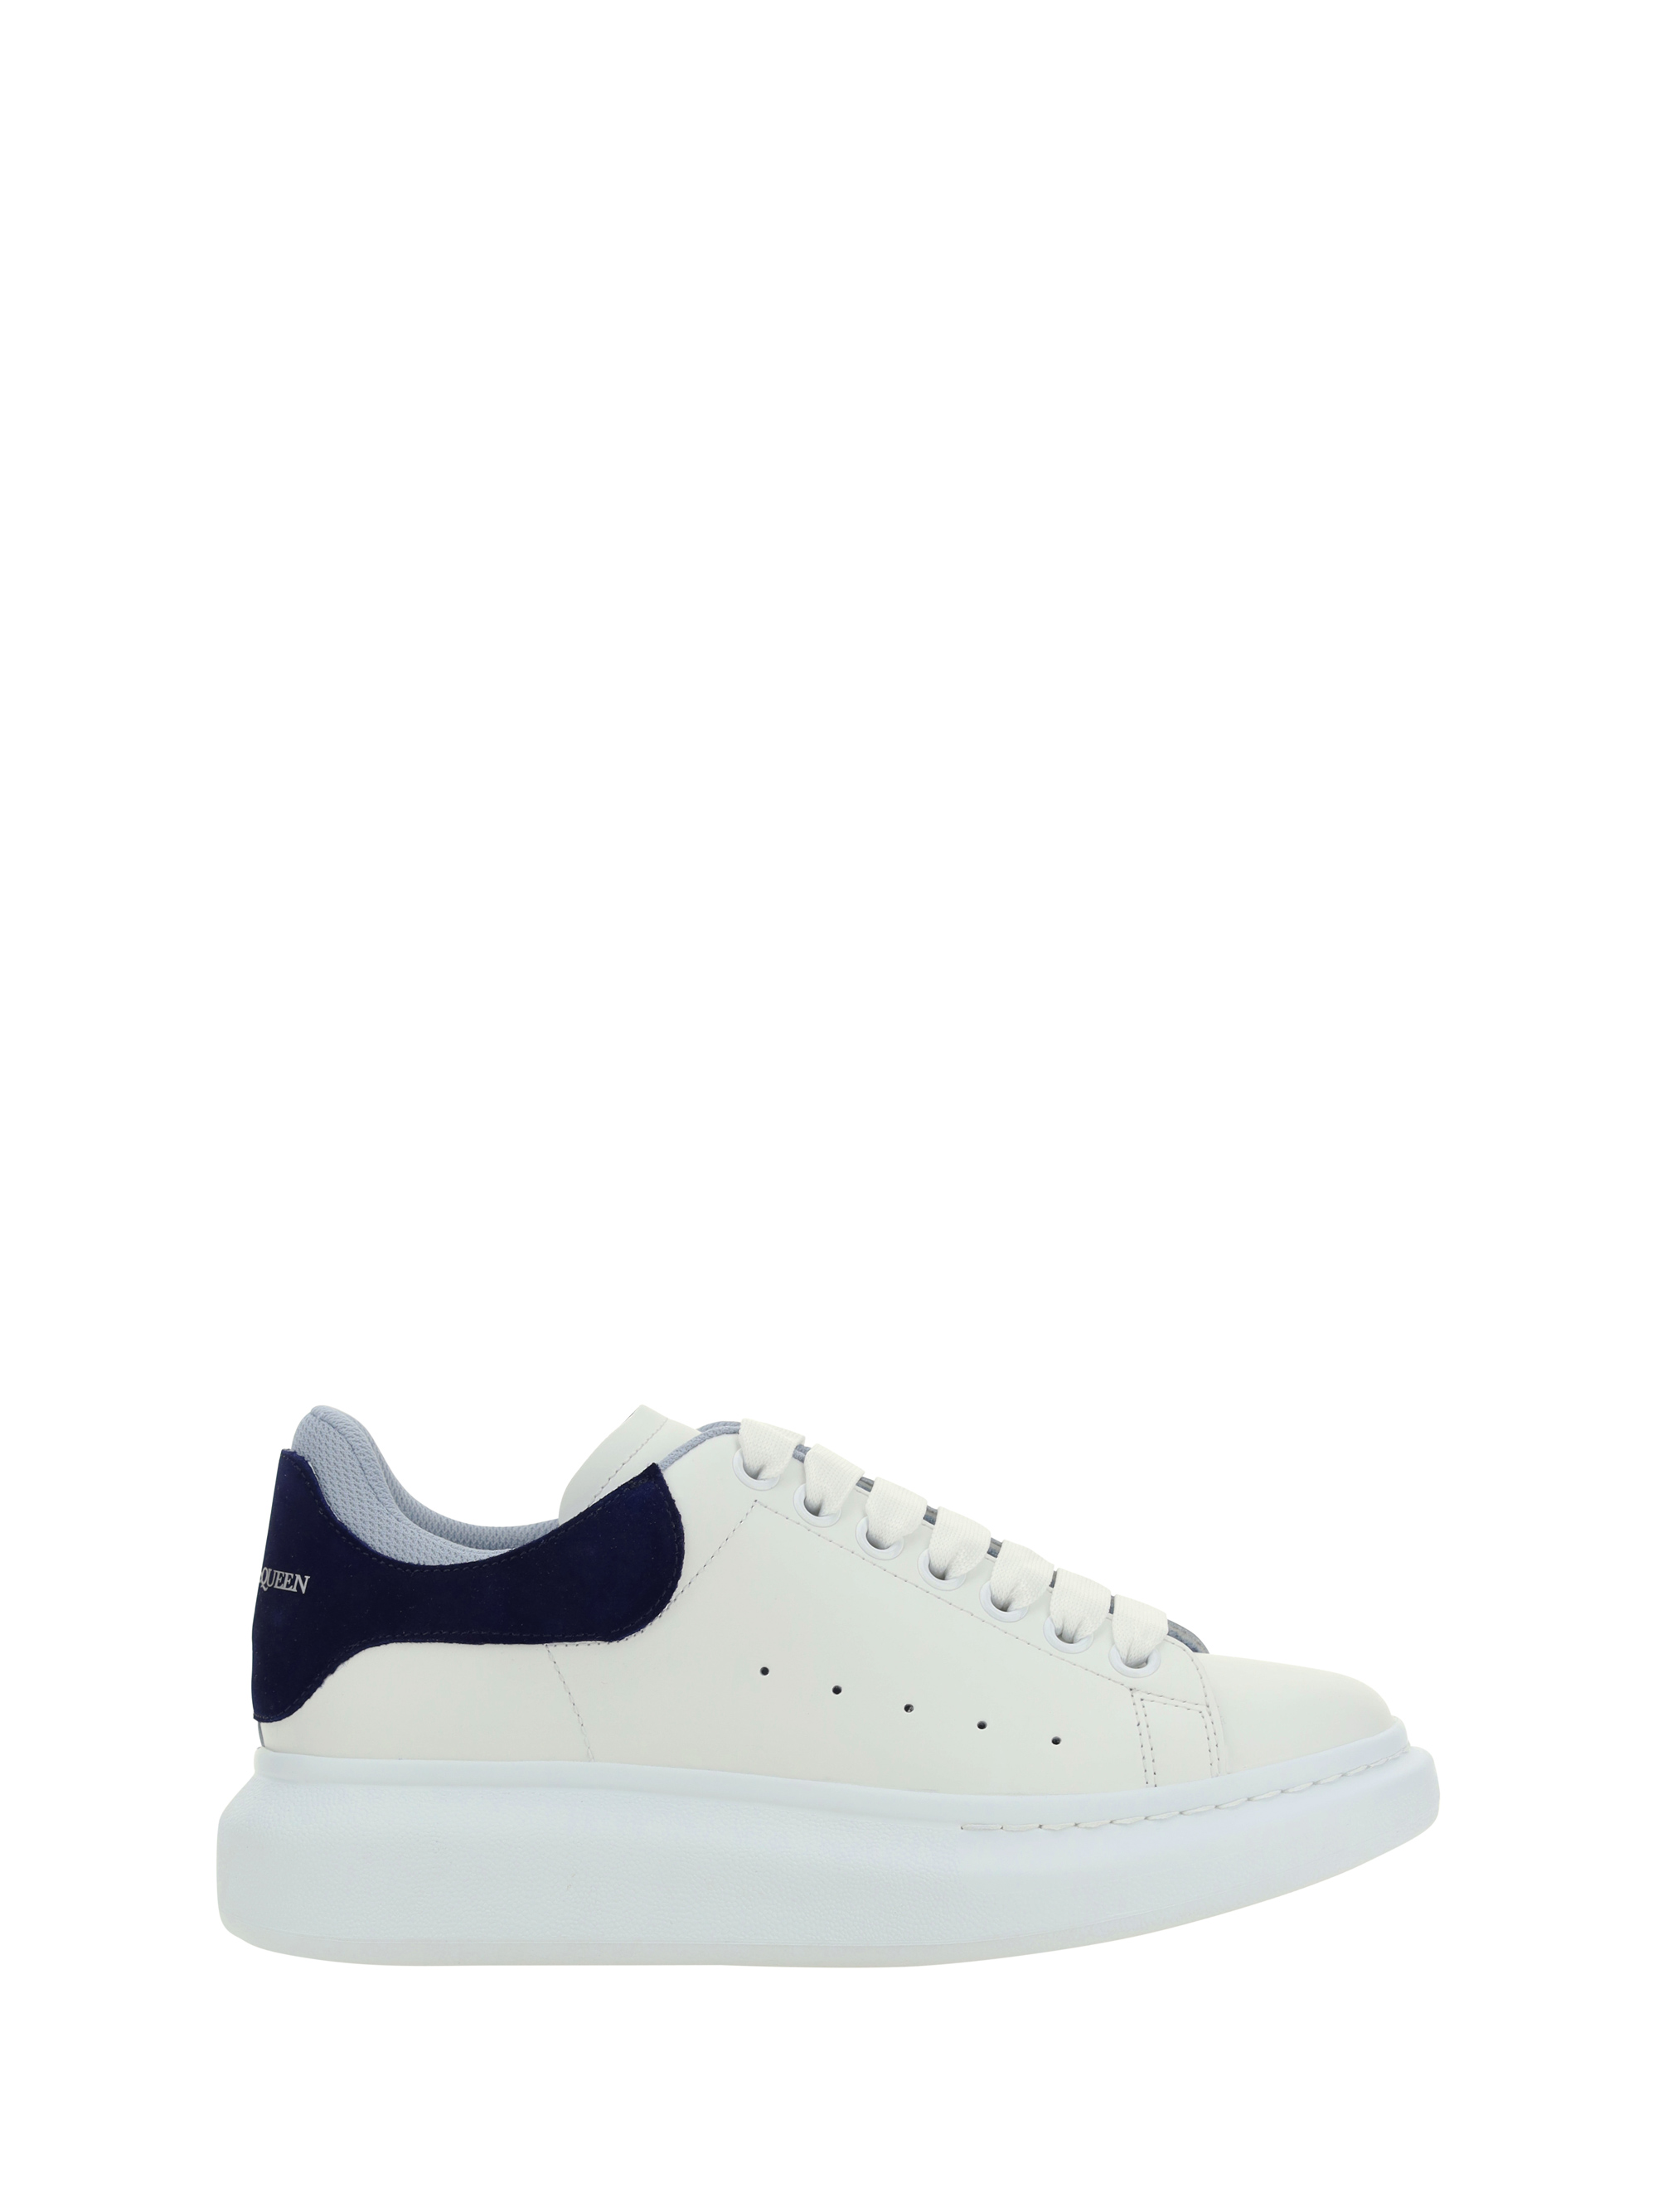 Alexander Mcqueen Sneakers In White/navy/lig Blue